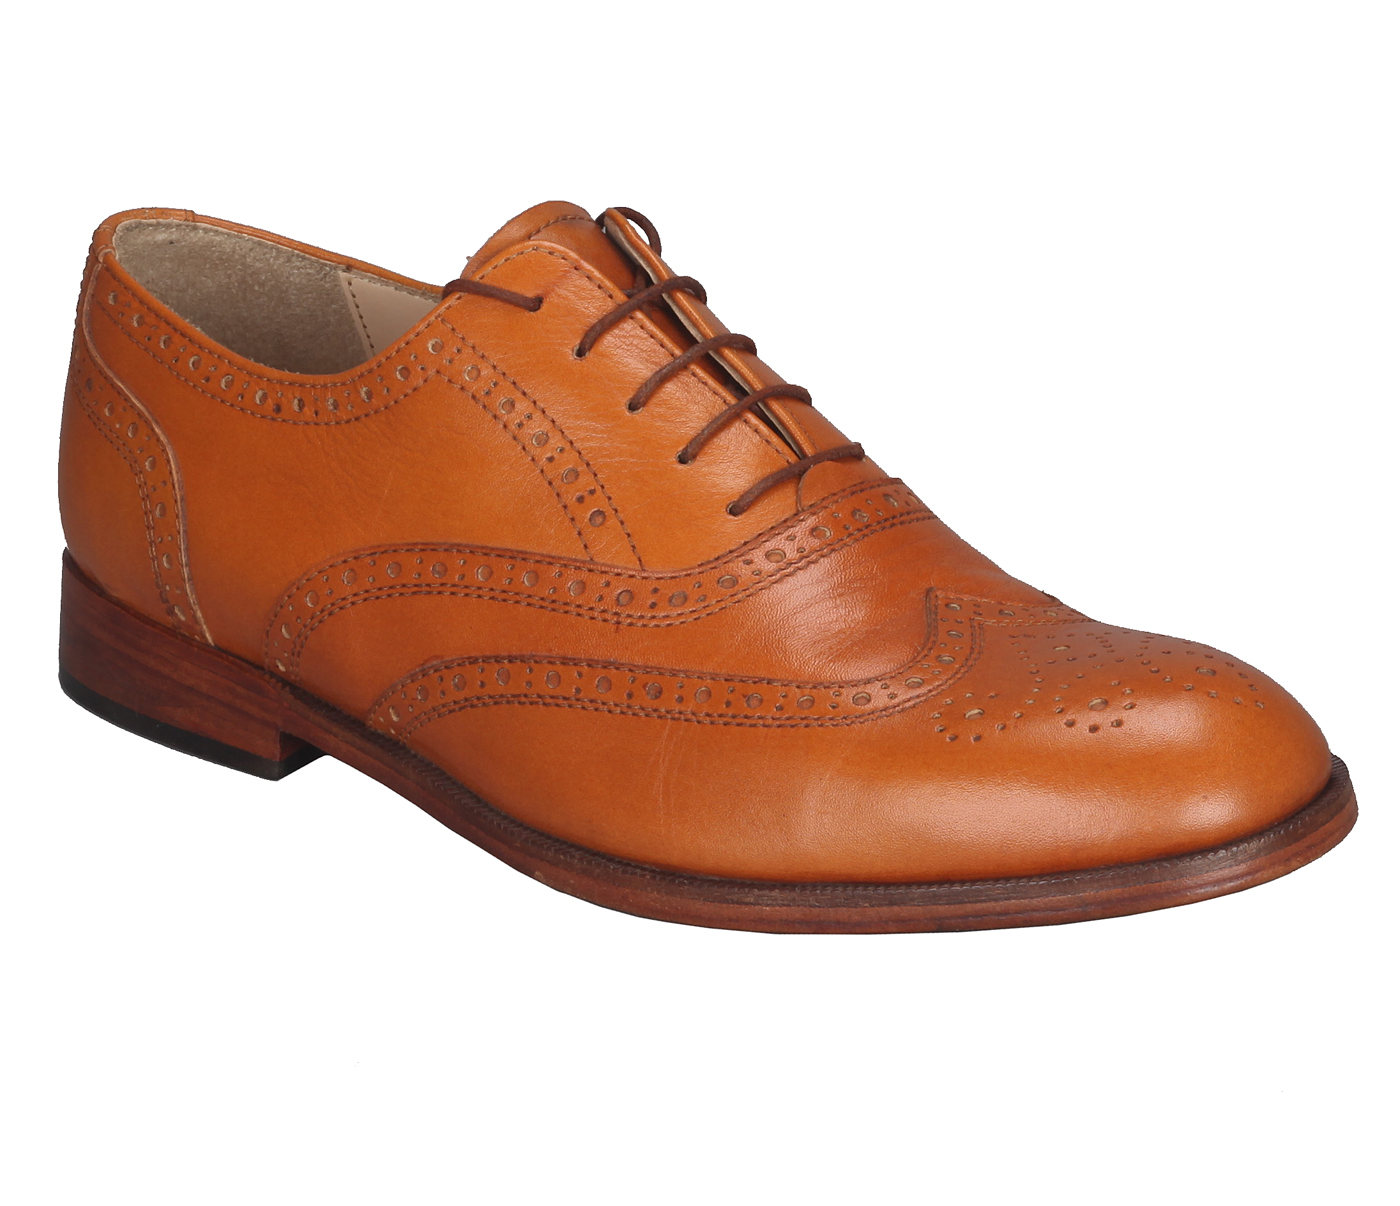  Leather Footwear(Tan)PF18